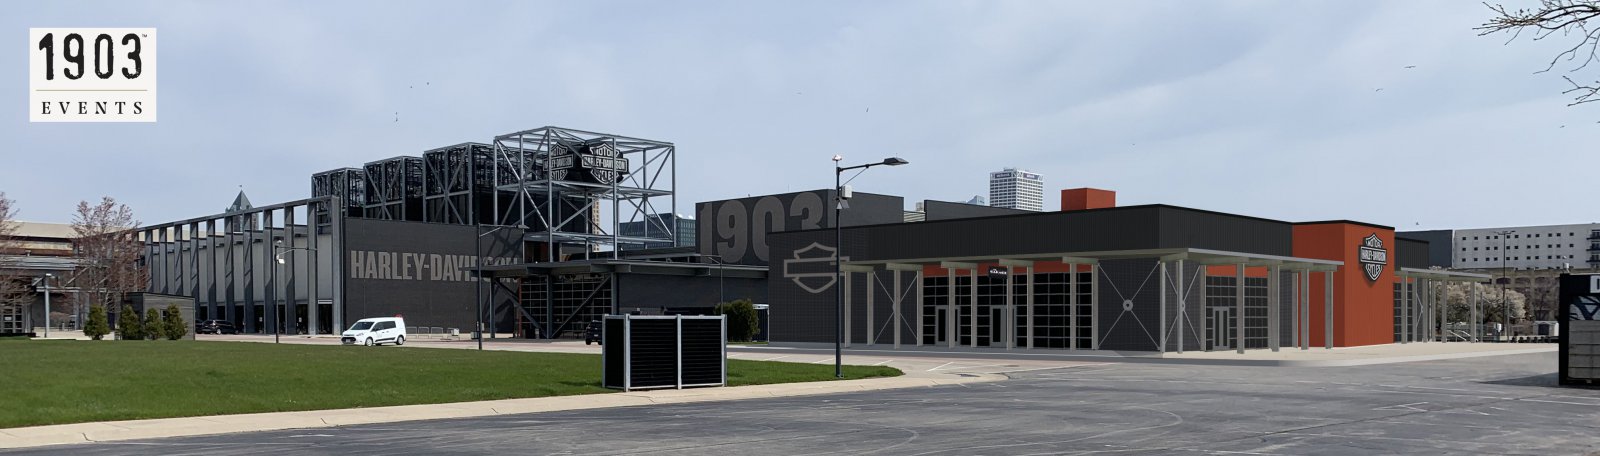 New Building at Harley-Davidson Museum